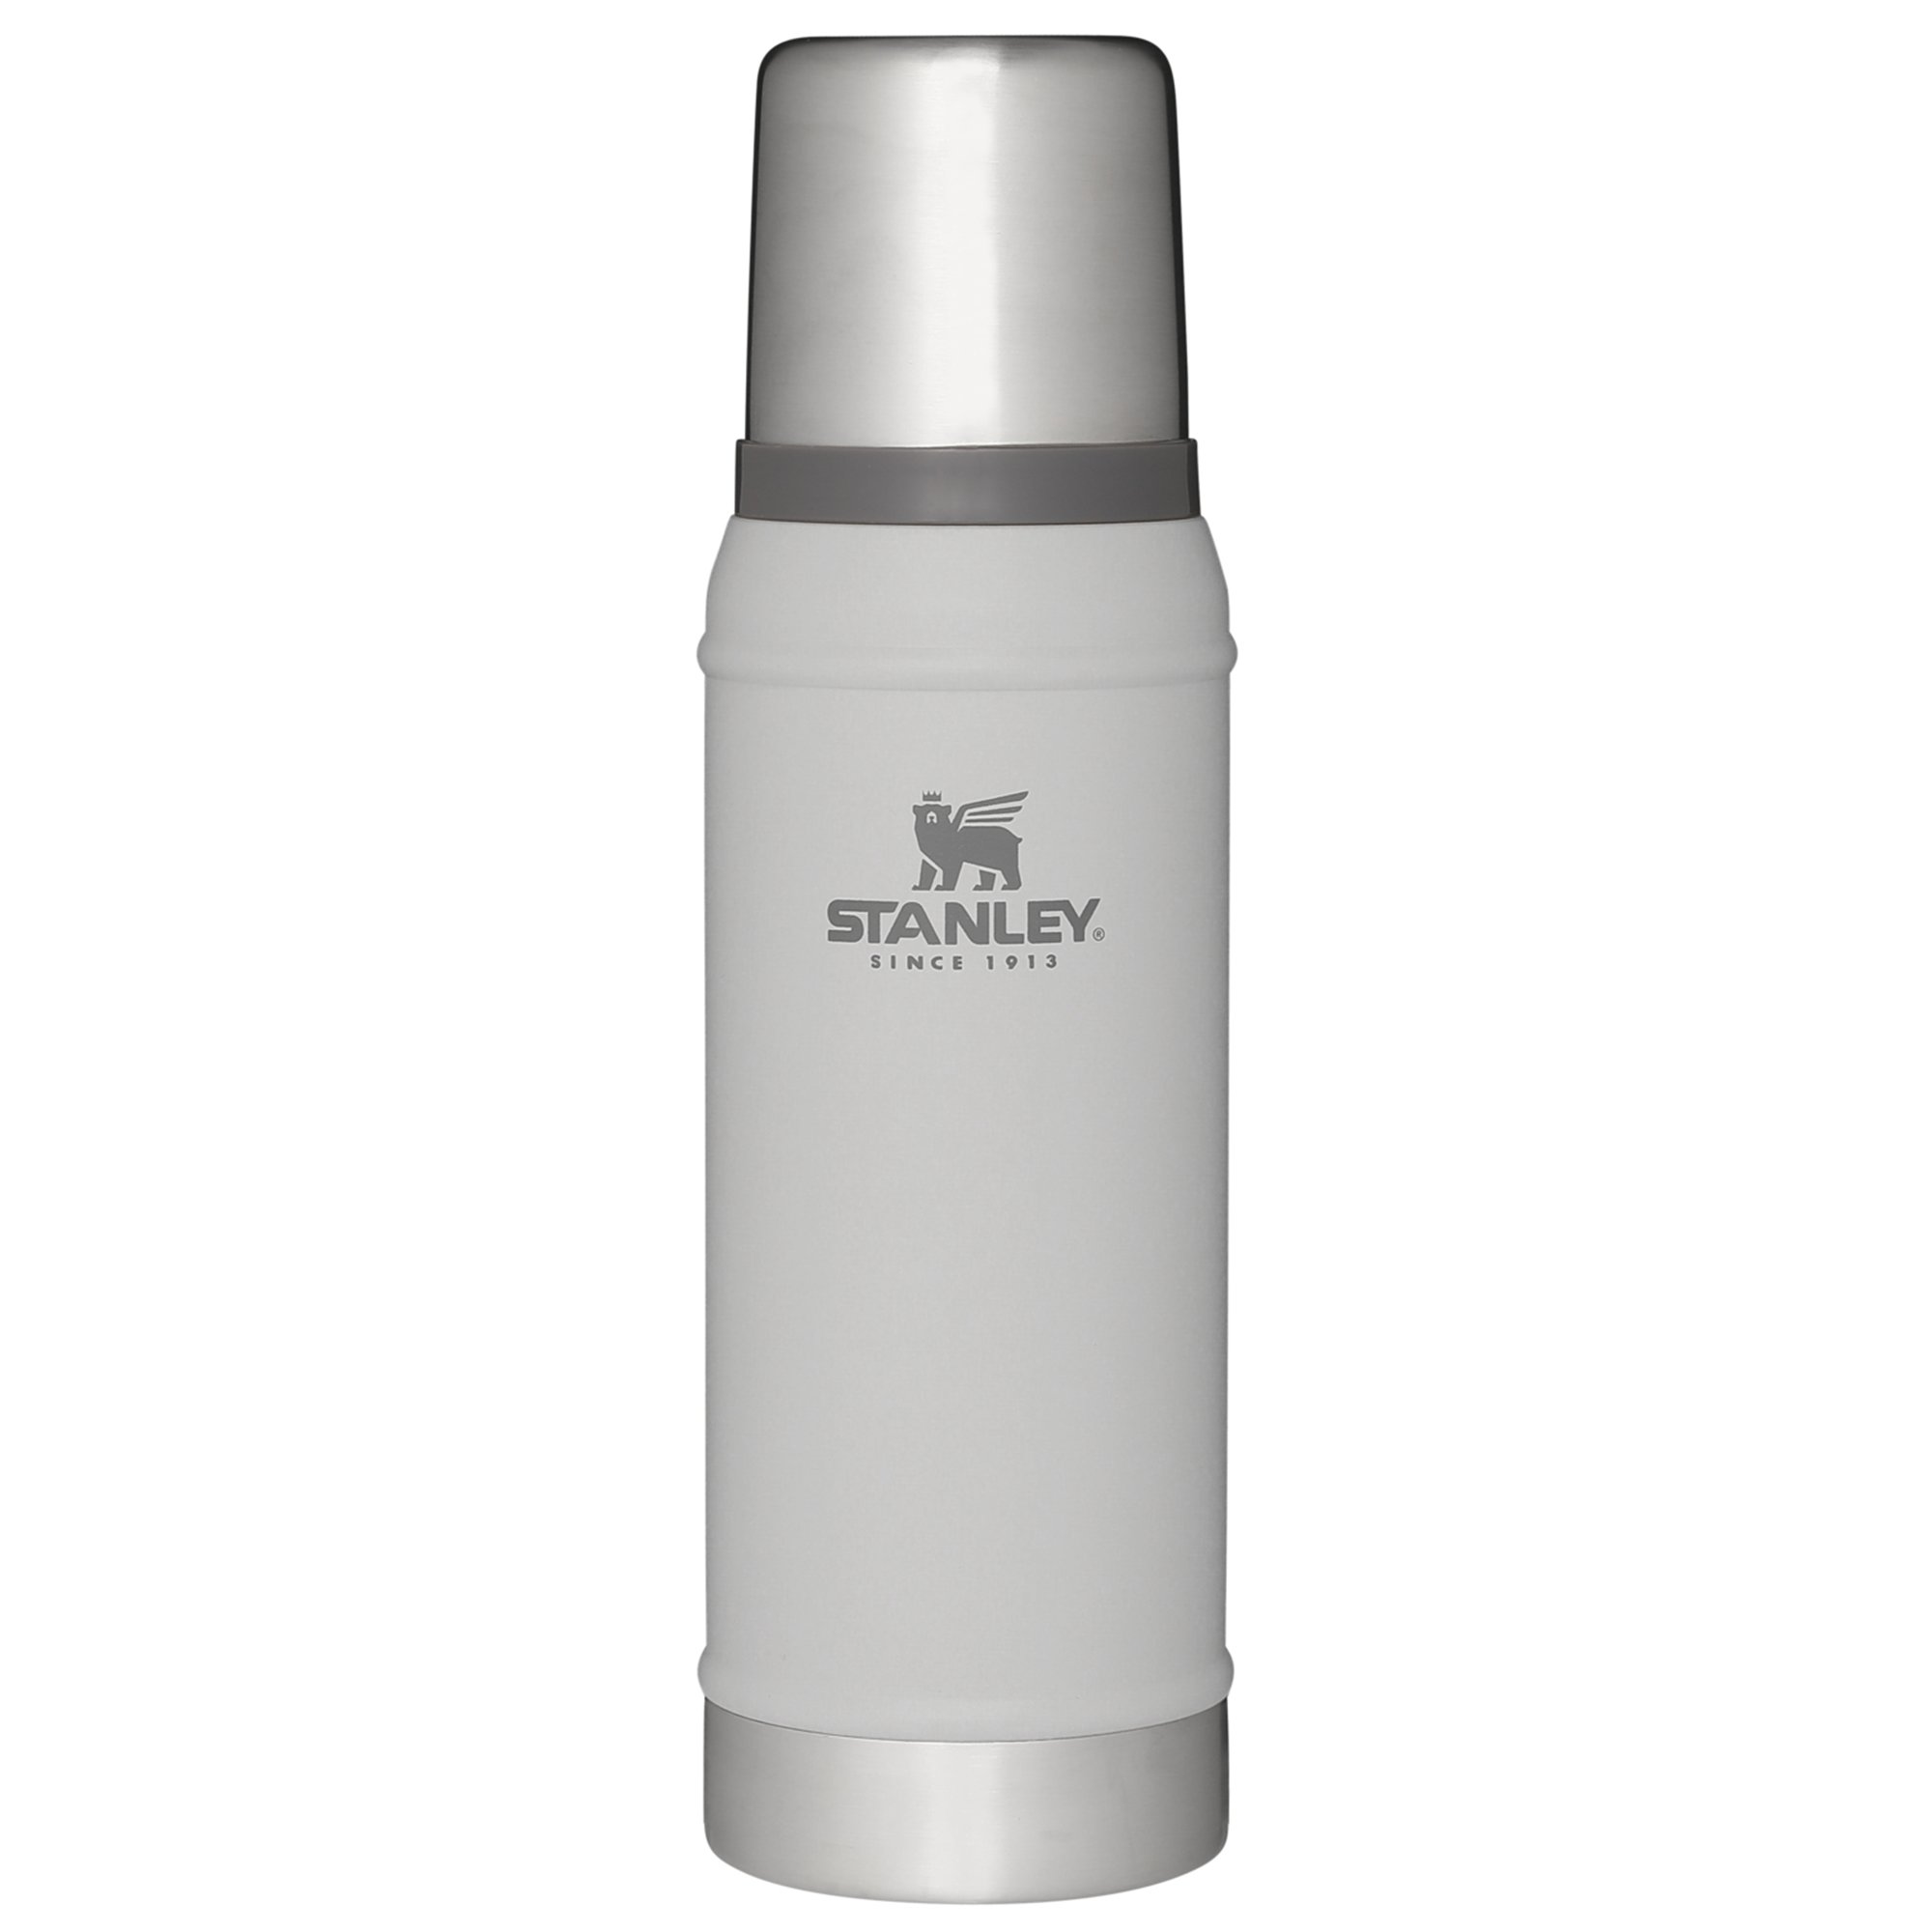 Stanley Legendary Classic Bottle termoflaske 0,75 liter, ash